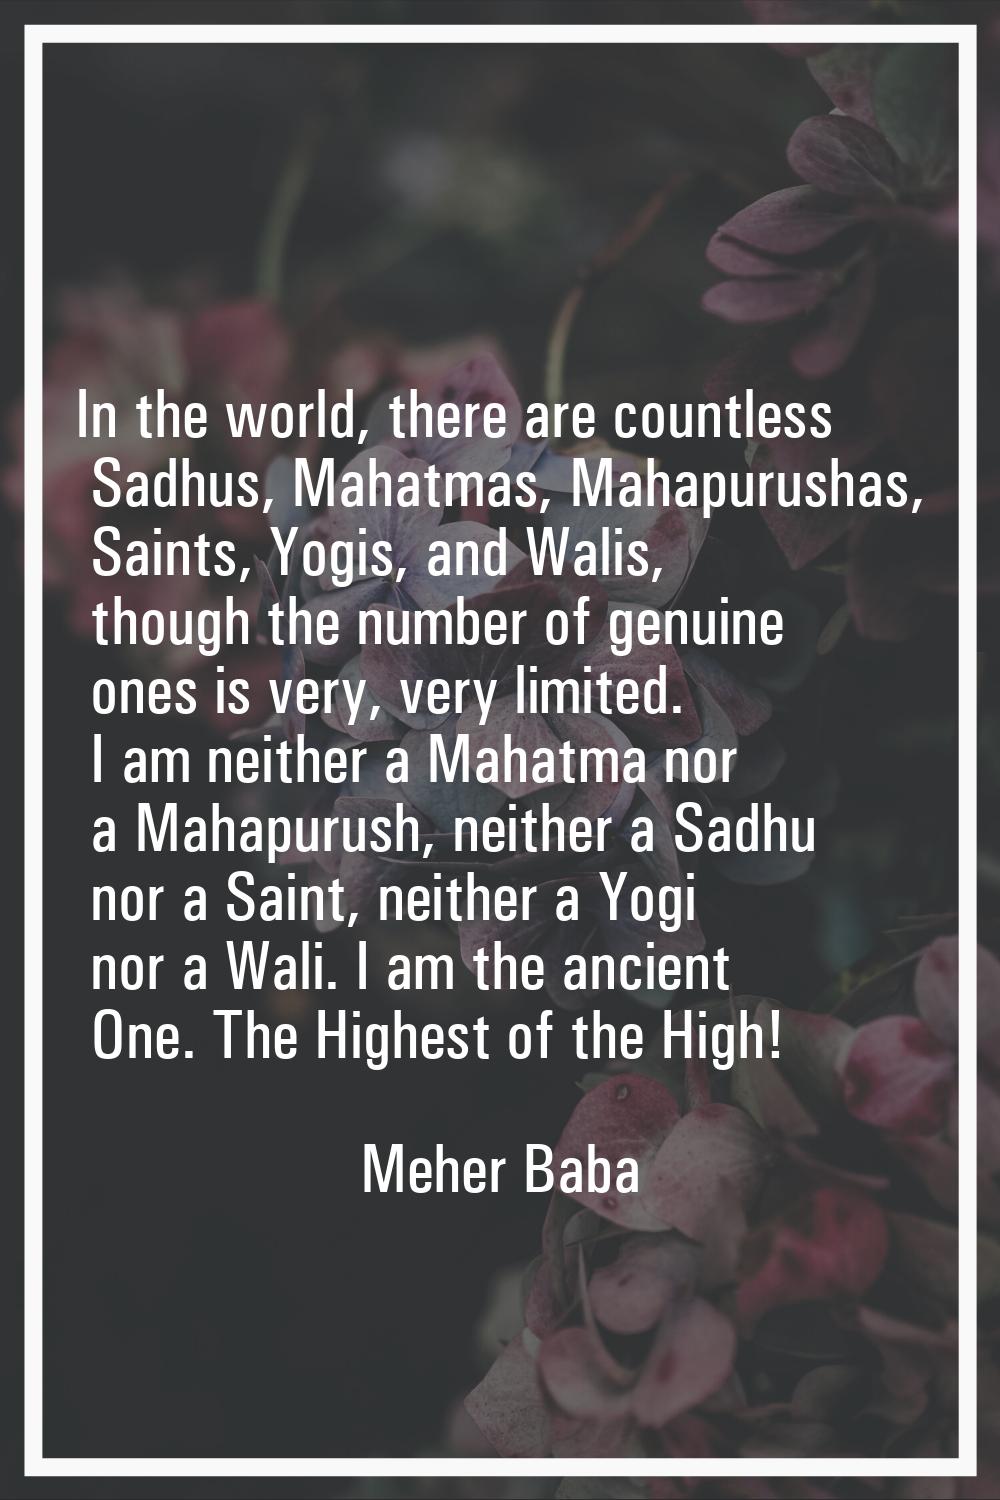 In the world, there are countless Sadhus, Mahatmas, Mahapurushas, Saints, Yogis, and Walis, though 